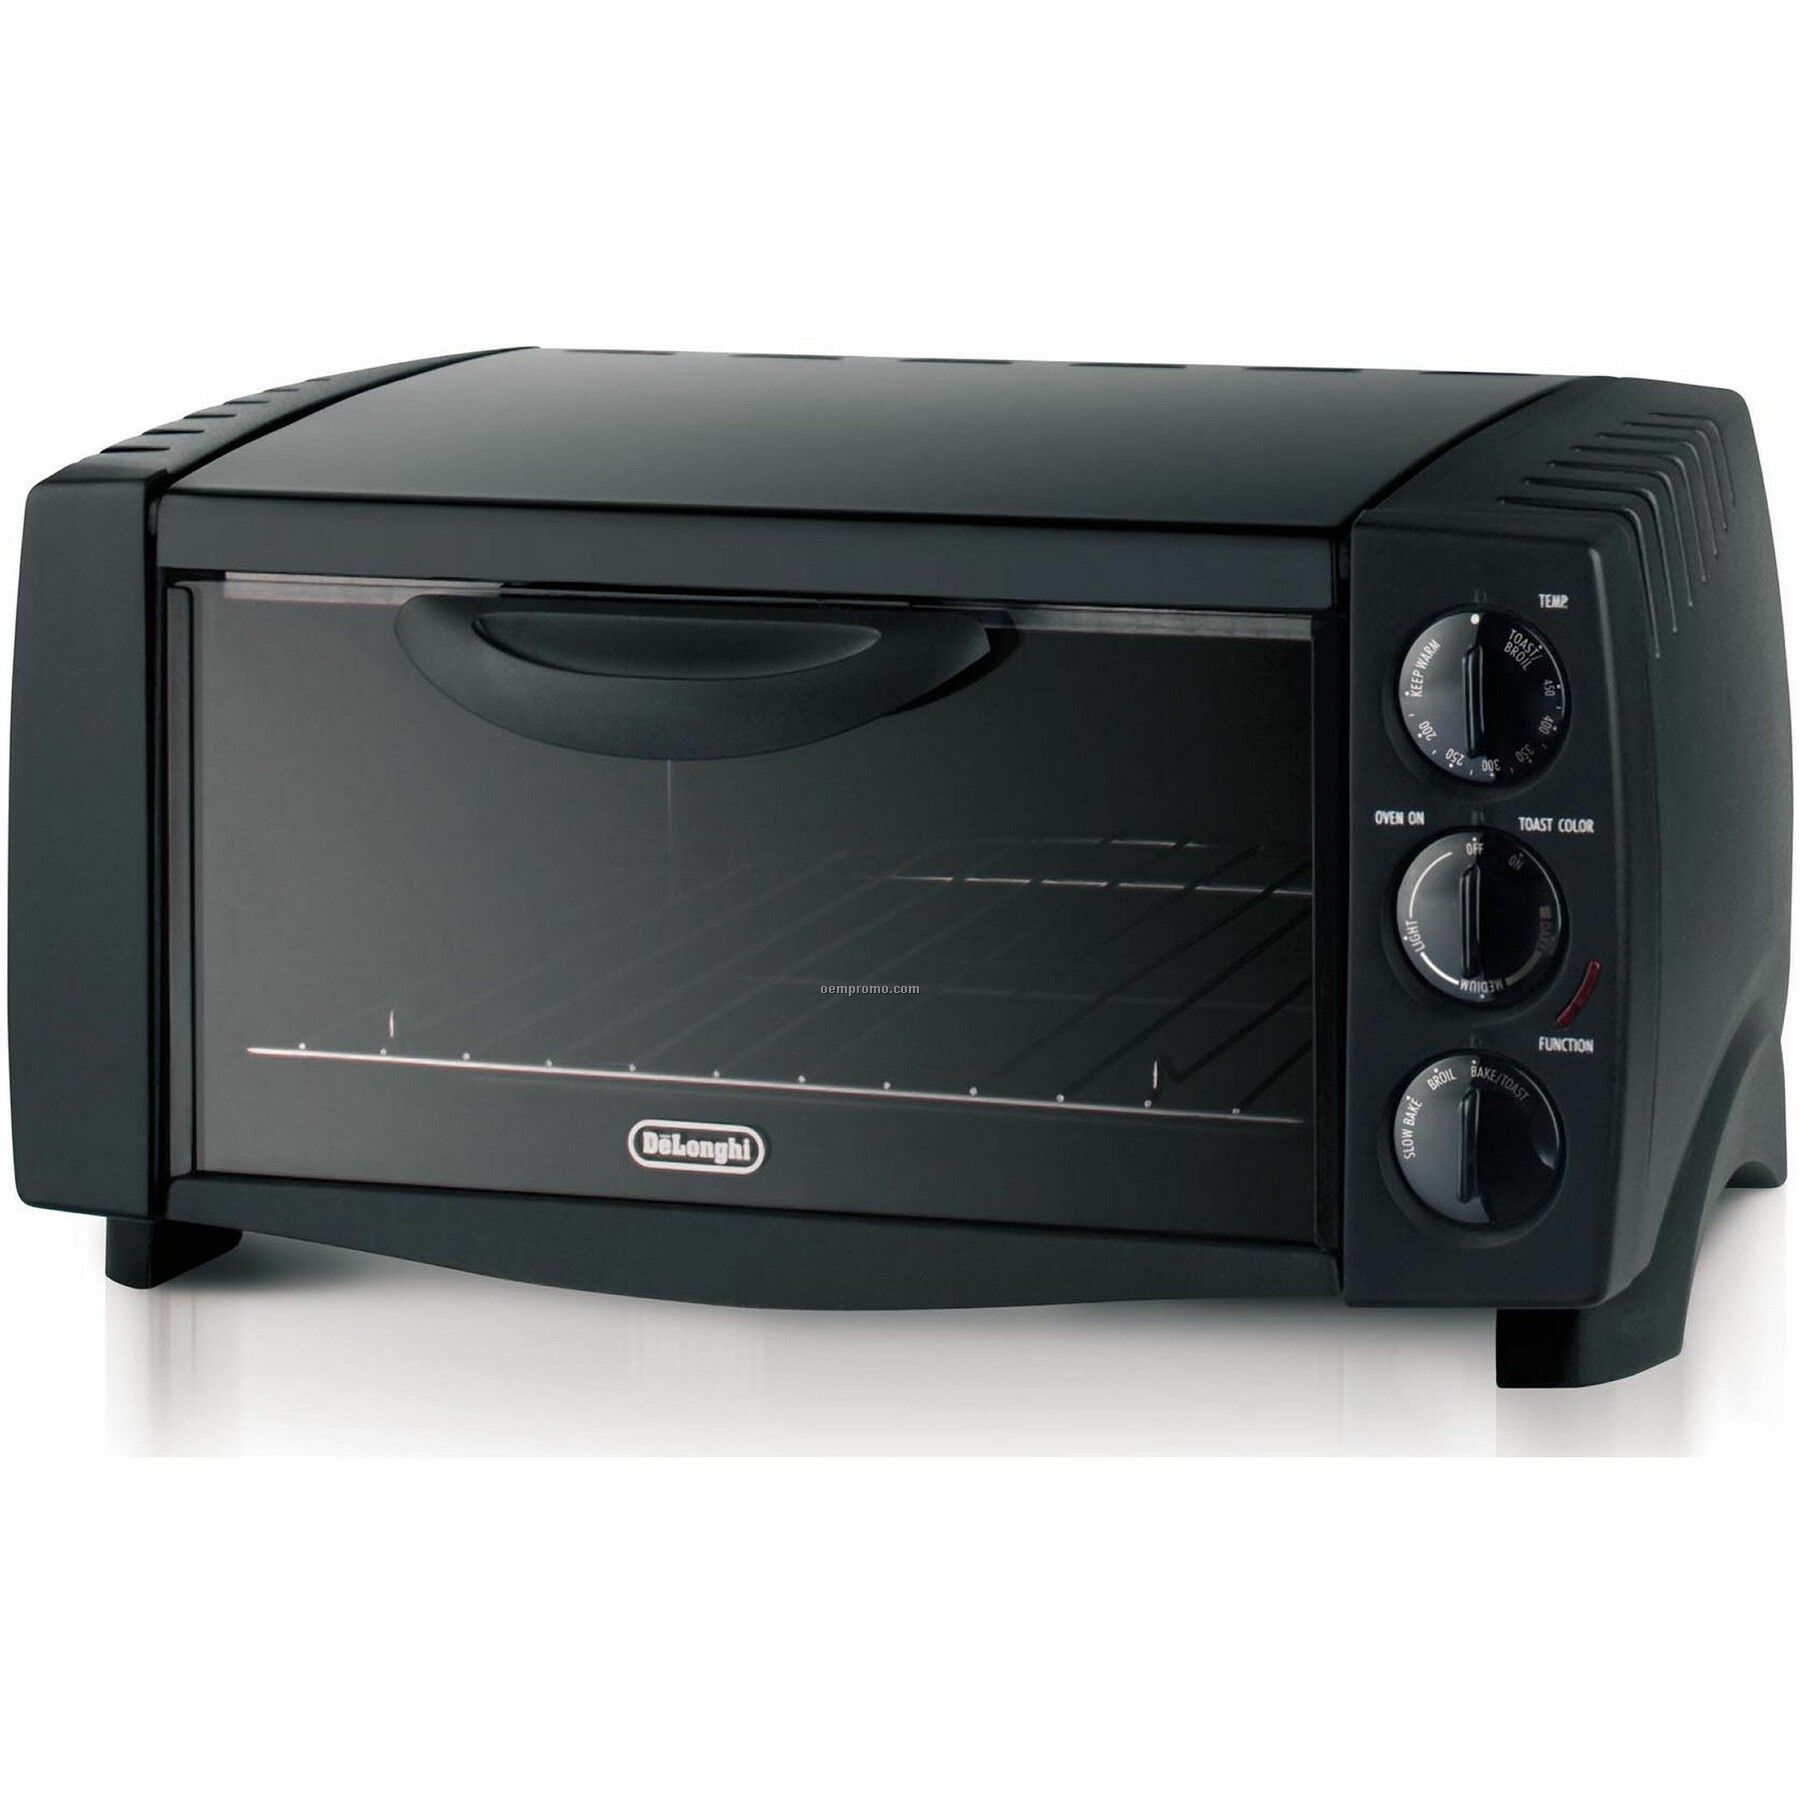 Delonghi 6-slice Toaster Oven